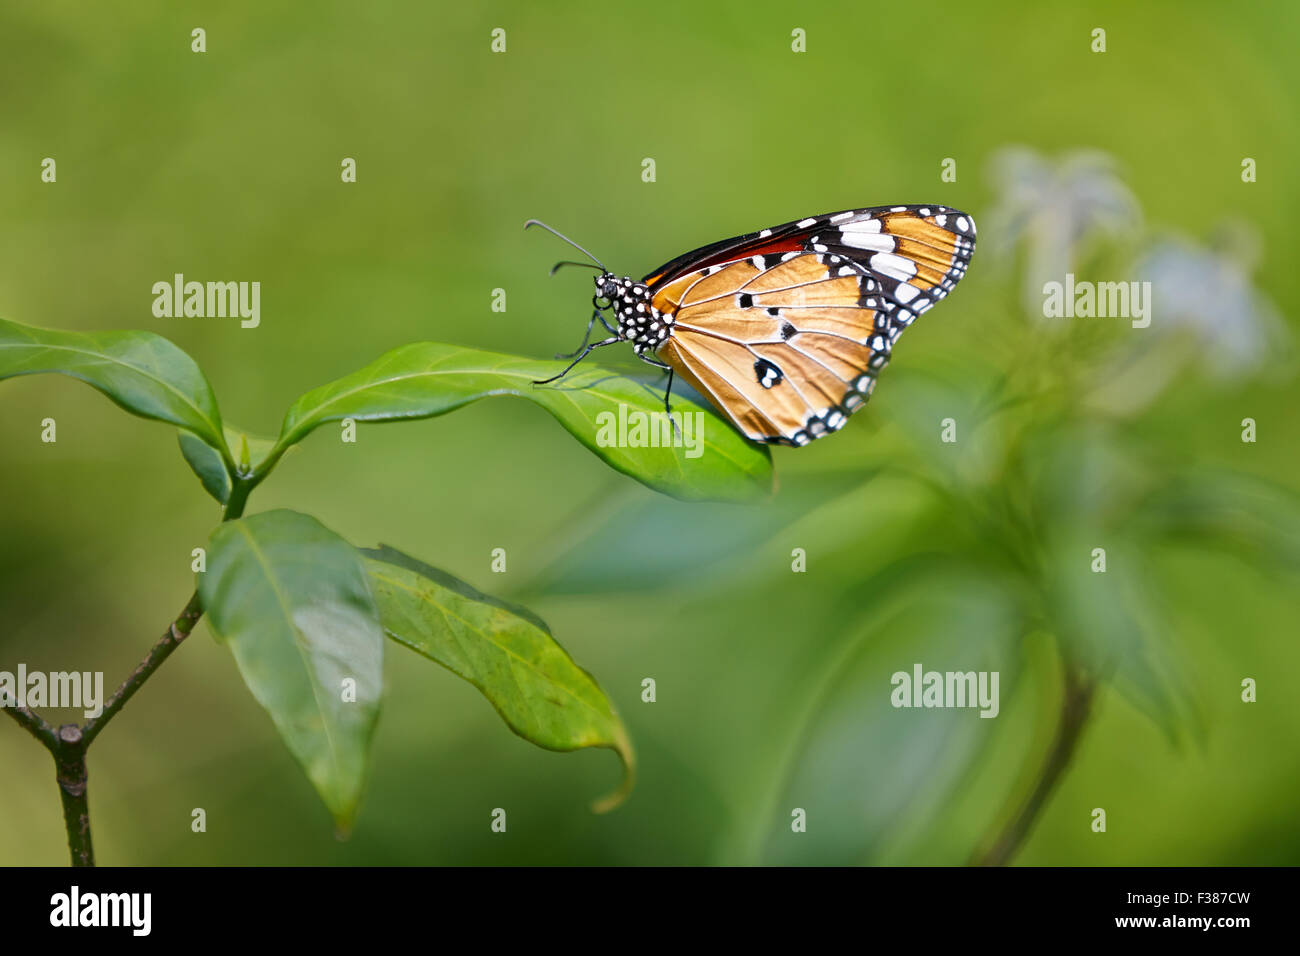 Plain Tiger Schmetterling. Wissenschaftlicher Name: Danaus wachen. Banteay Srei Schmetterling Zentrum, Siem Reap Provinz, Kambodscha. Stockfoto